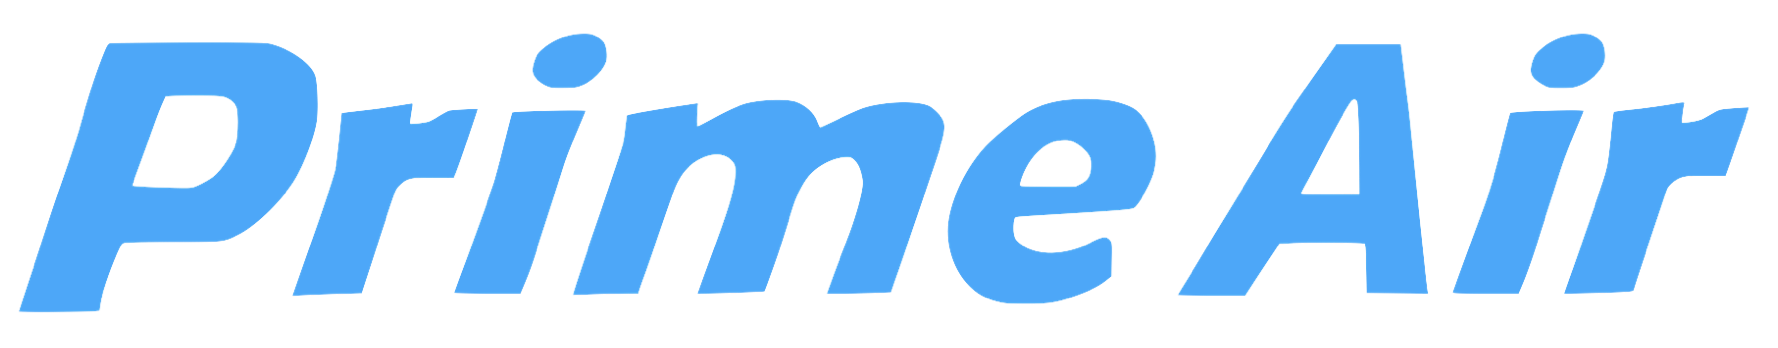 Amazon Prime Air Logo Logodix